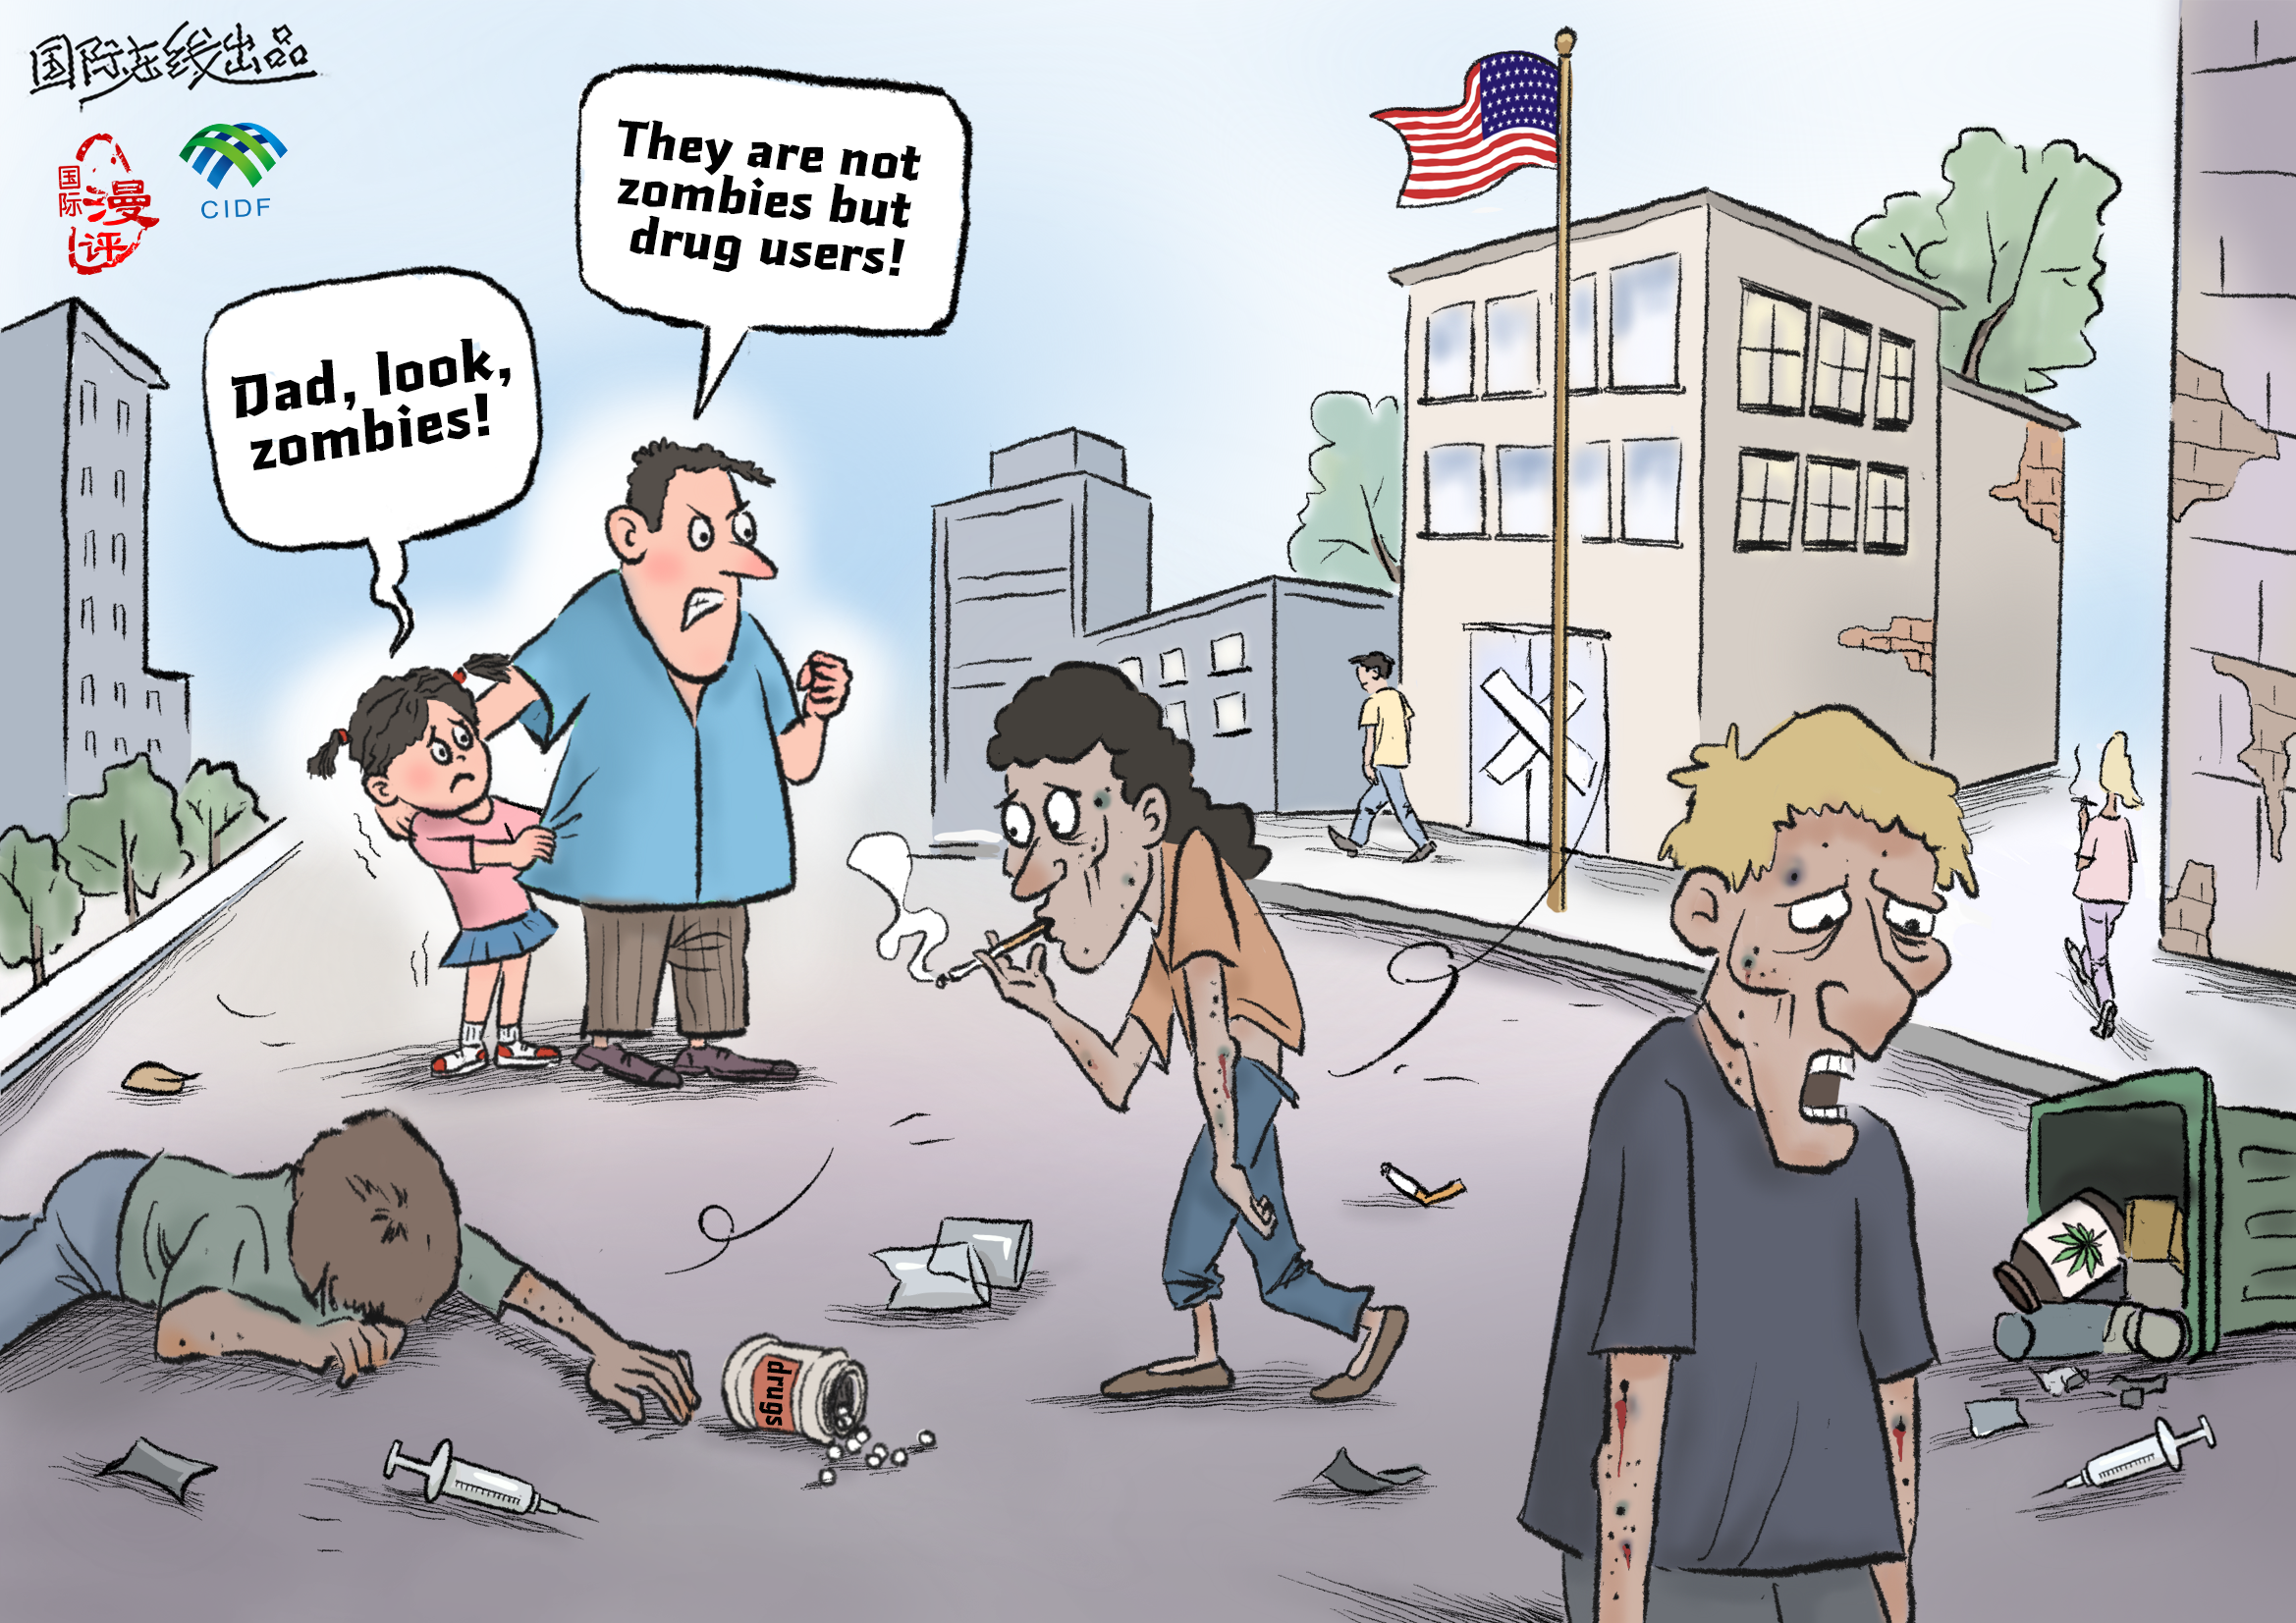 editorial cartooning about drug addiction